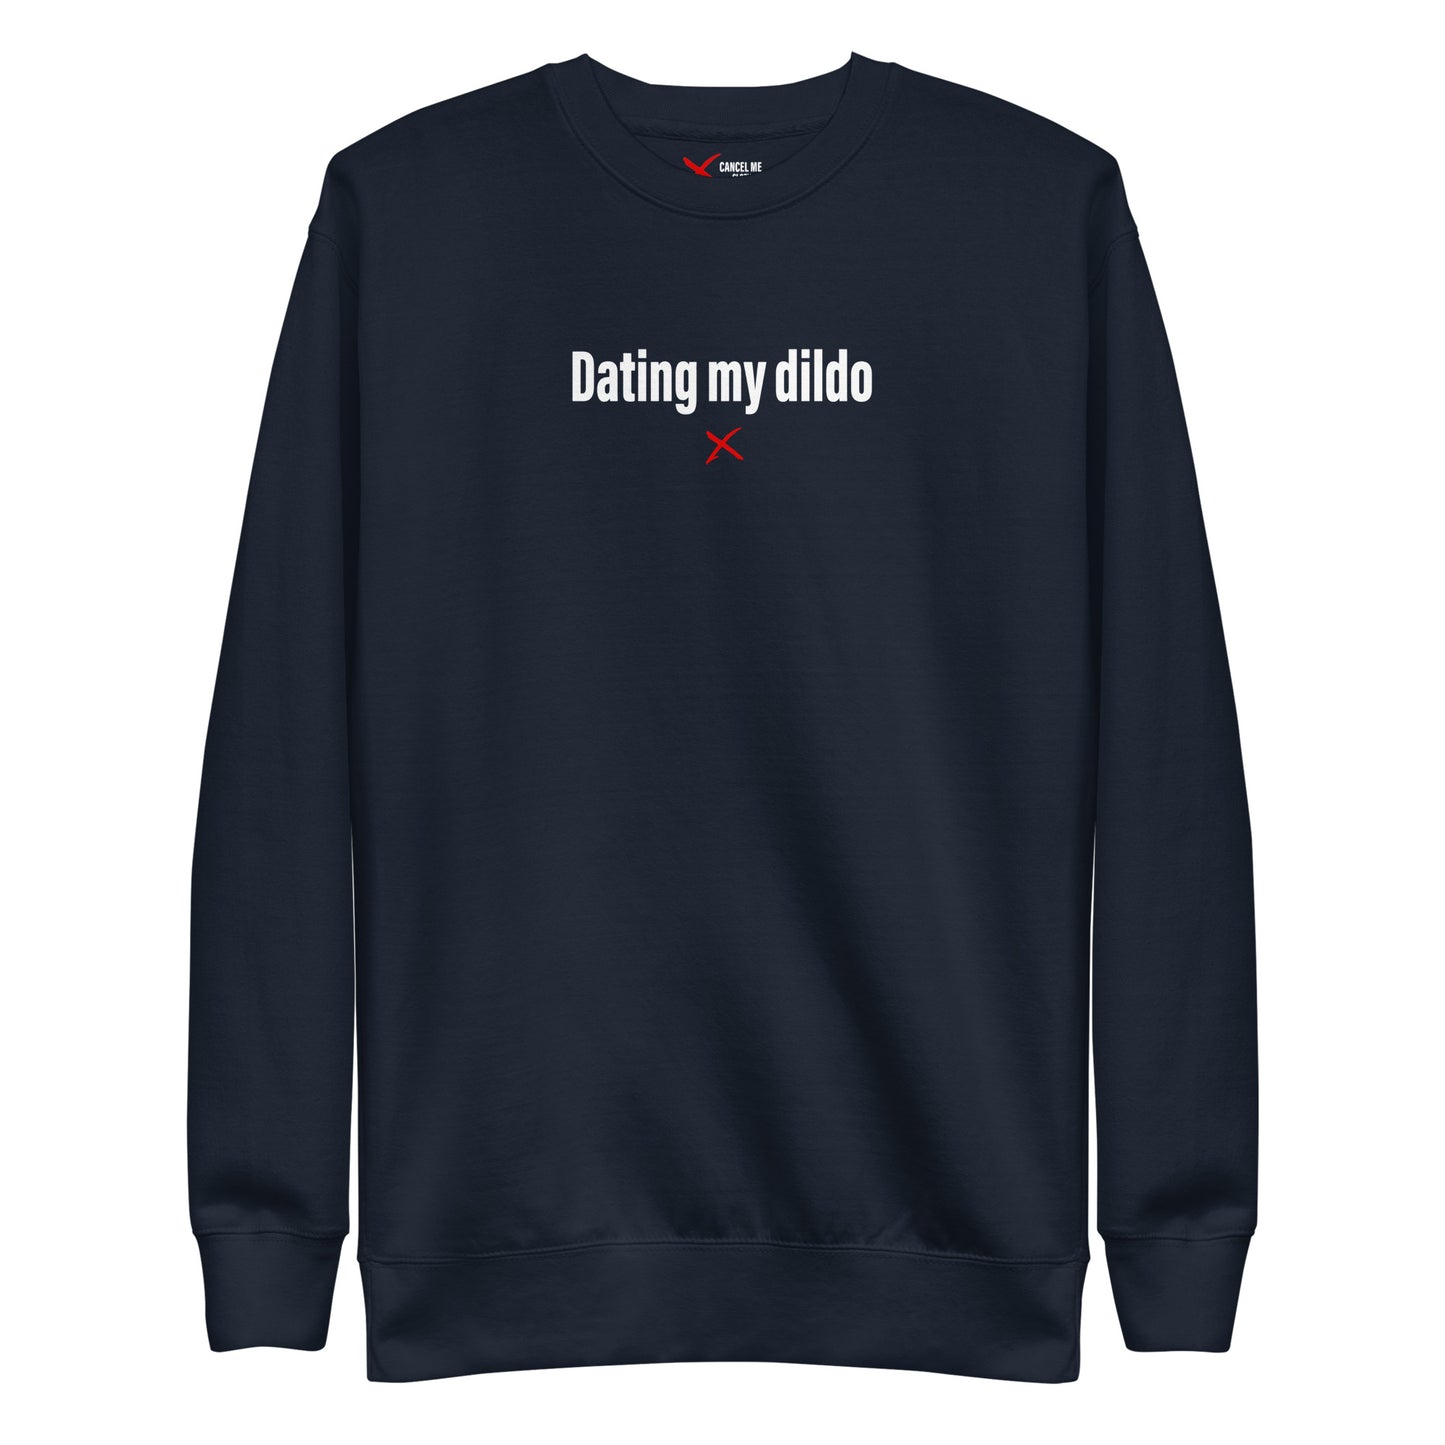 Dating my dildo - Sweatshirt